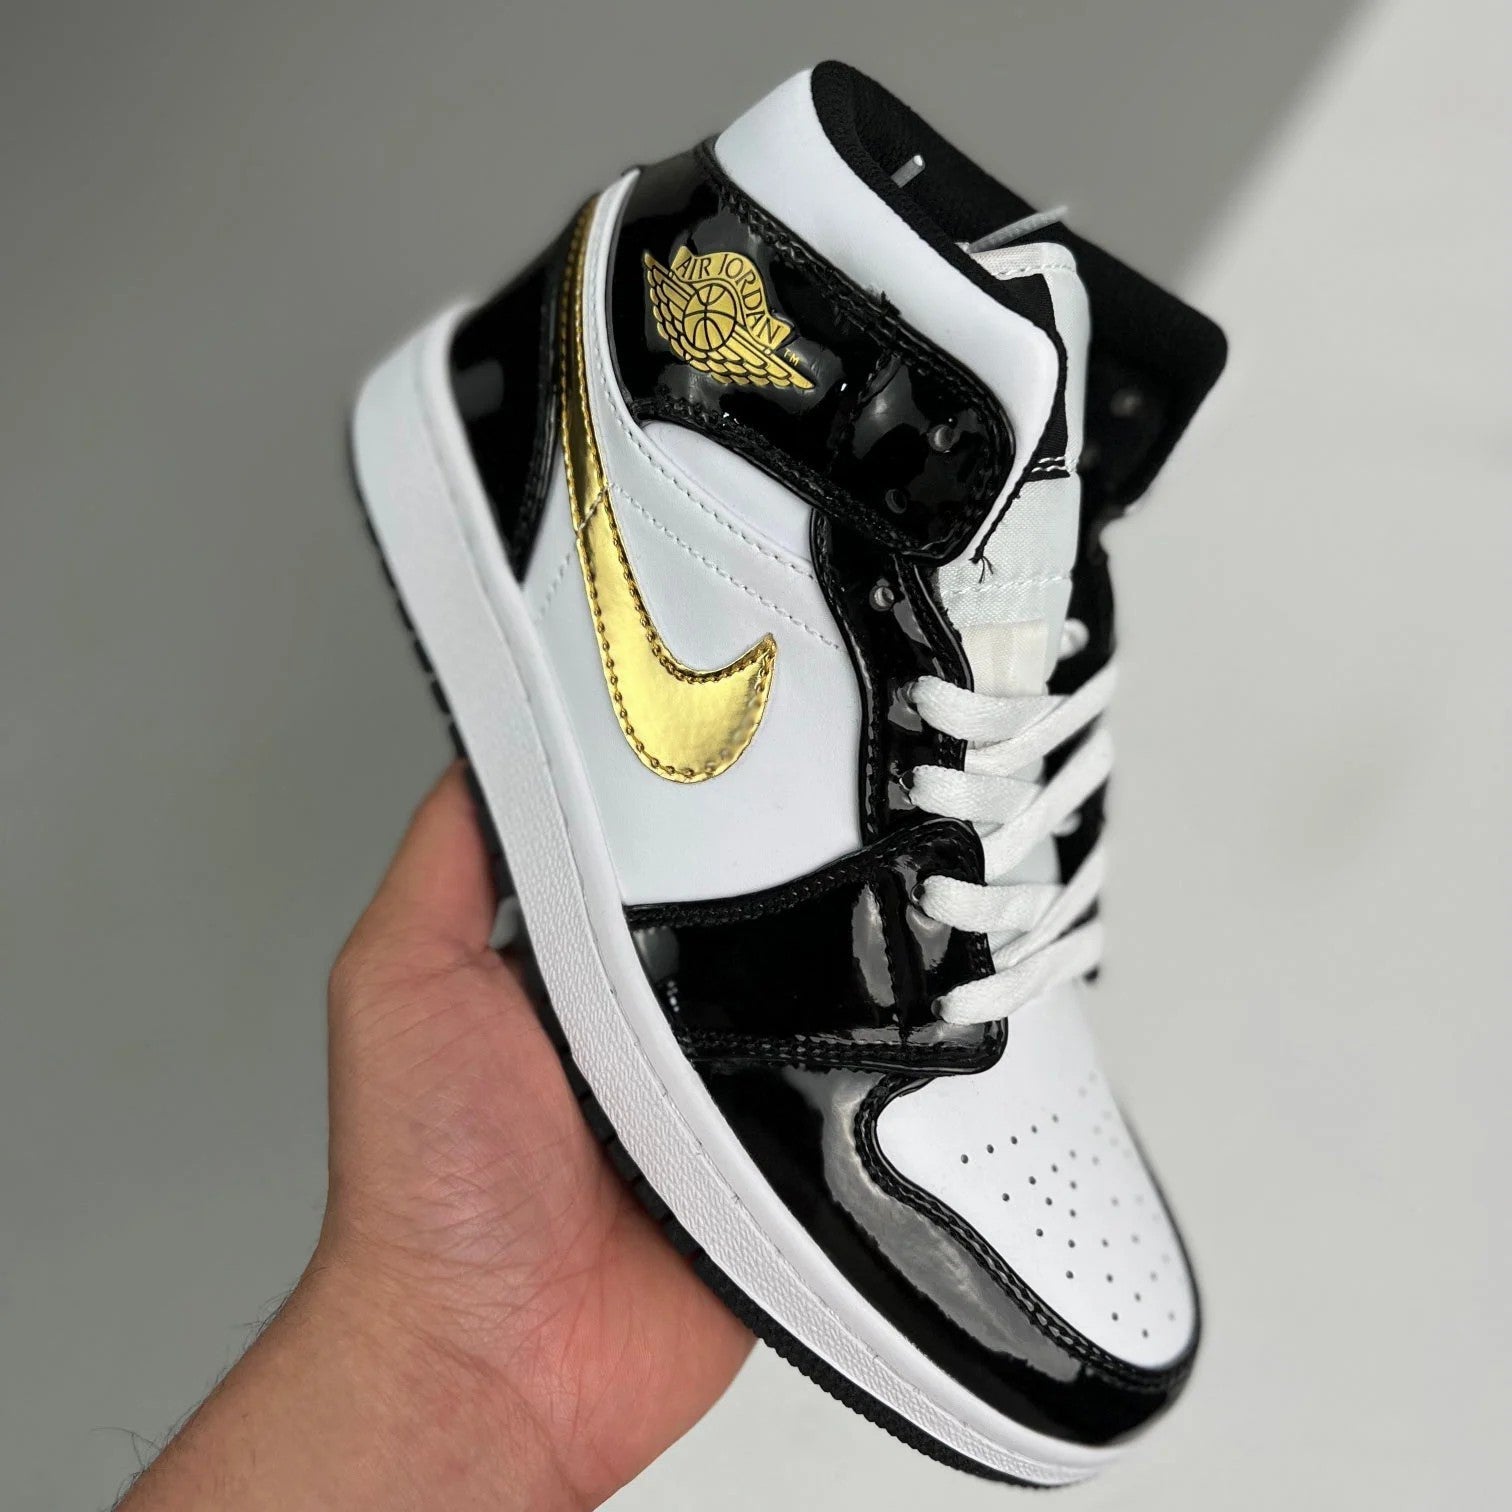 Nike Air Jordan 1 Mid Patent Black White Gold Sneakers Shoes